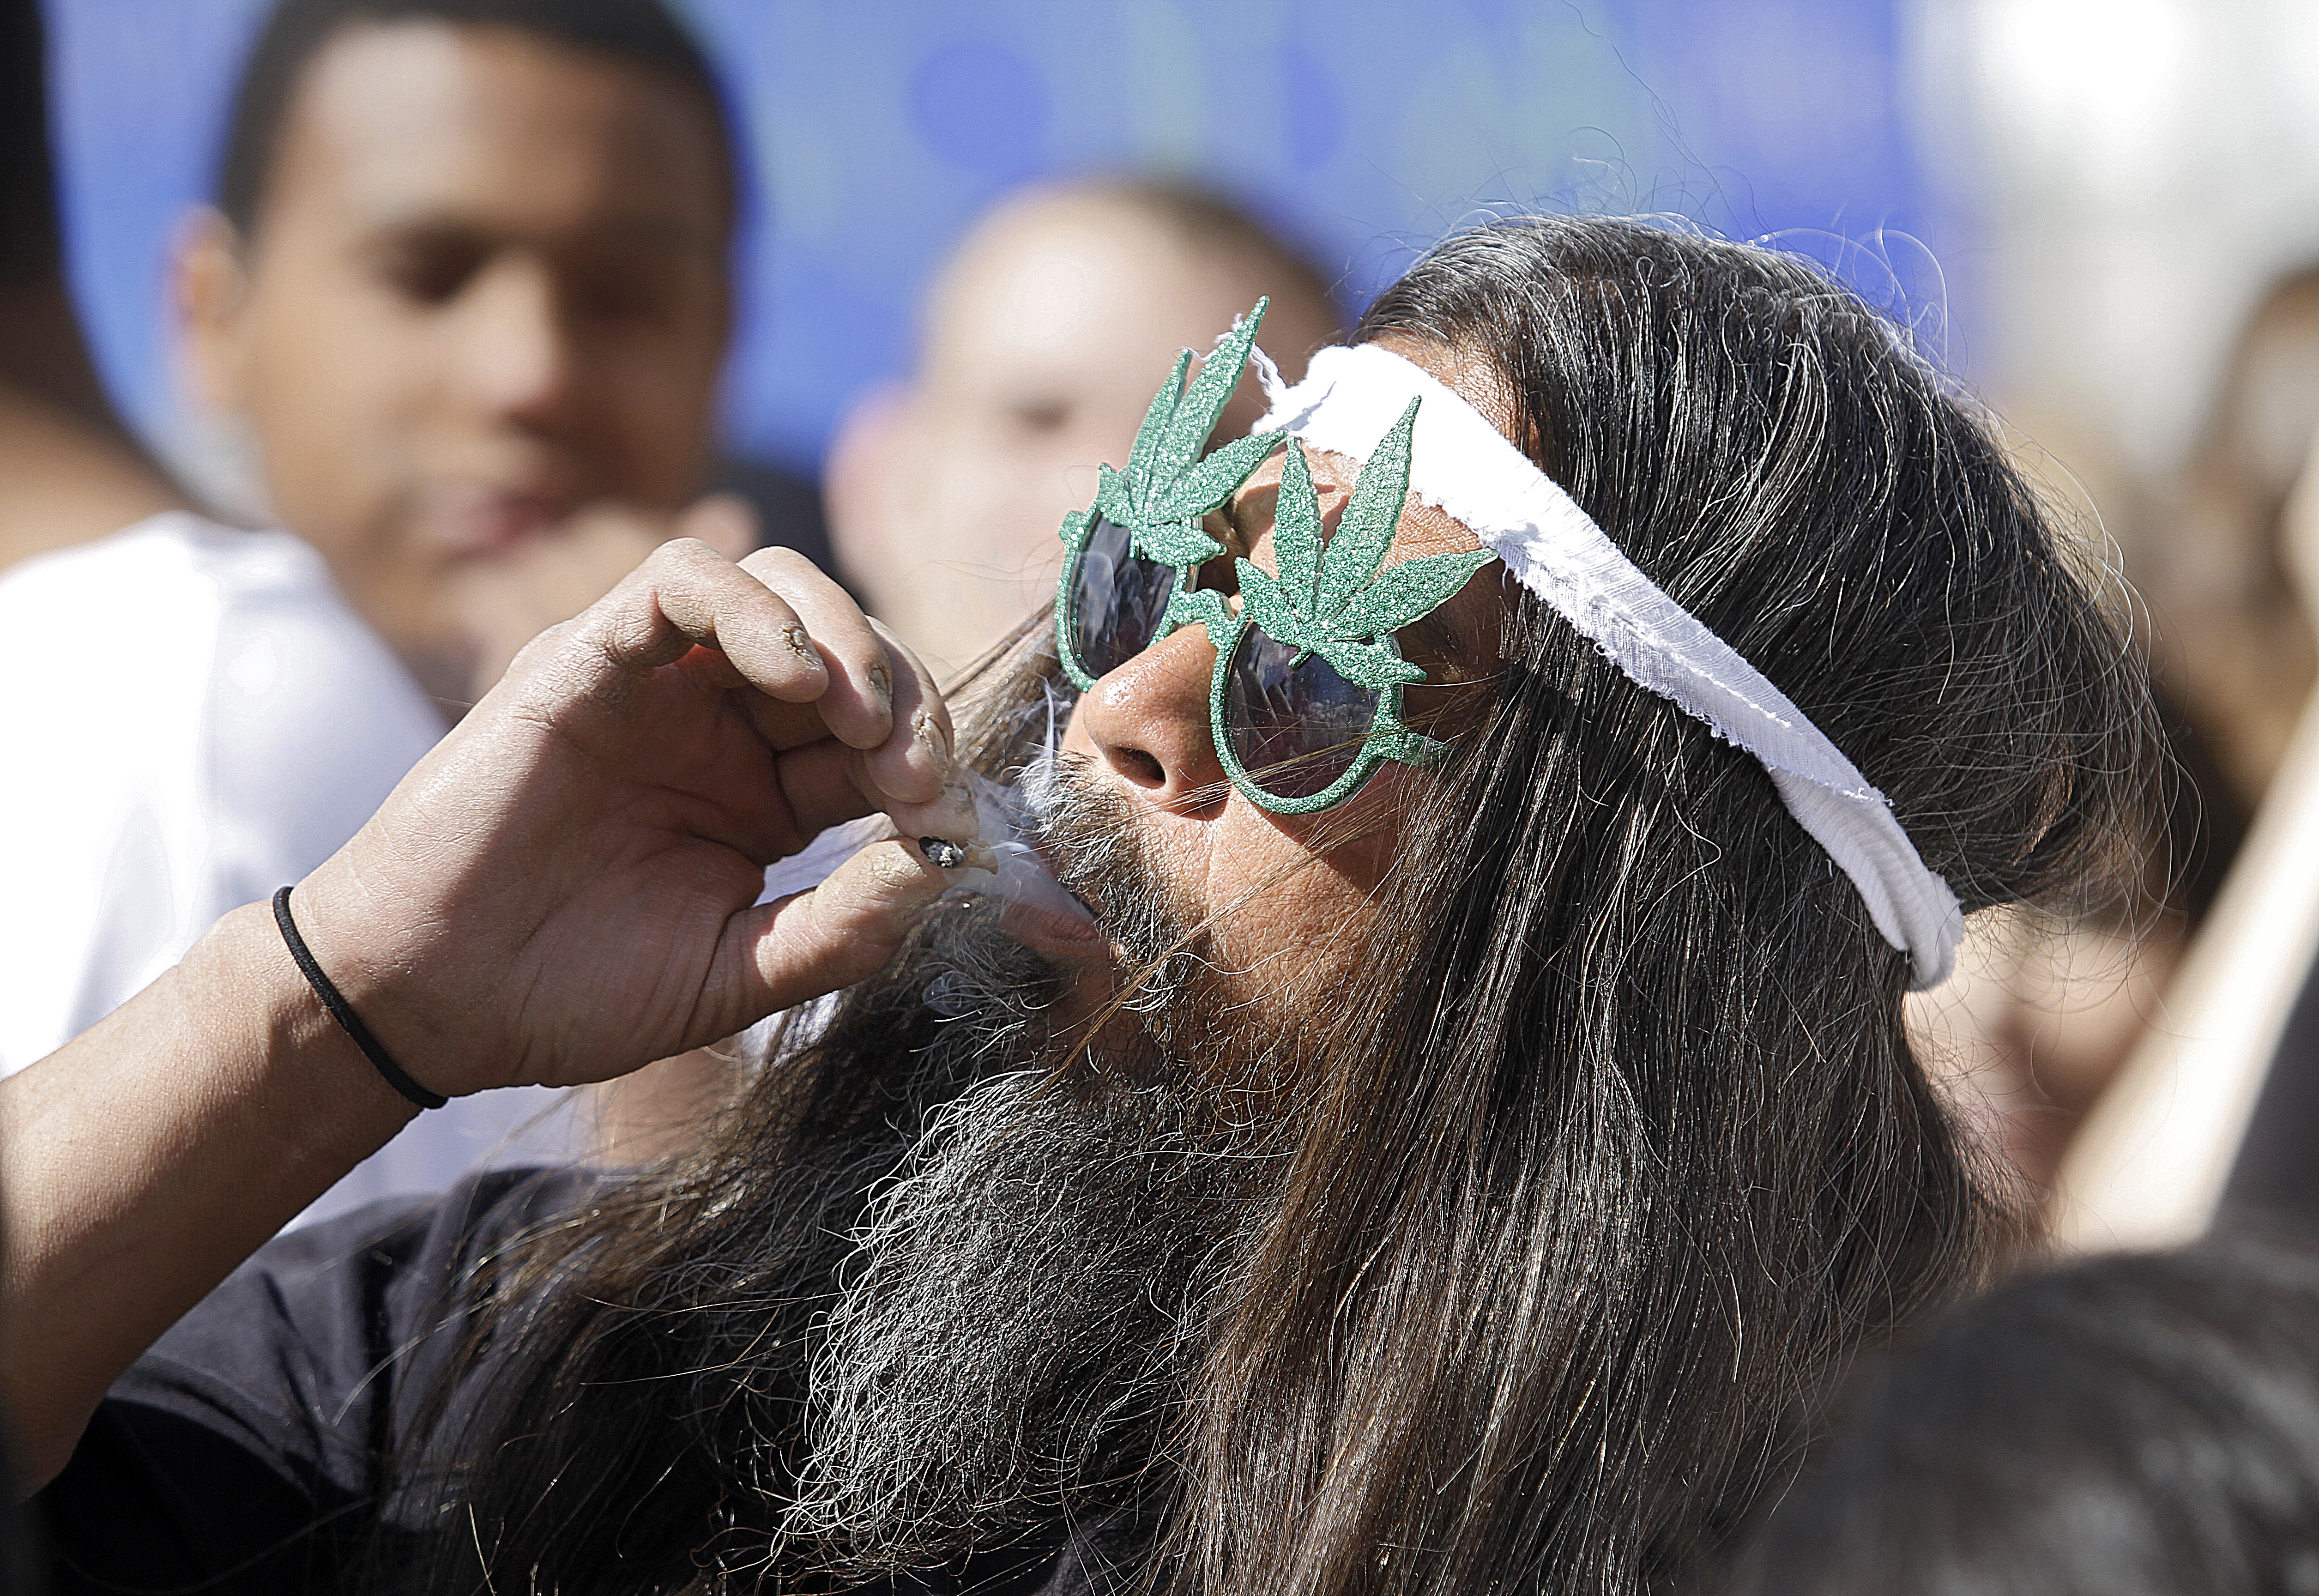 Coloradoan's Celebrate 4/20 With Marijuana Smokeout 